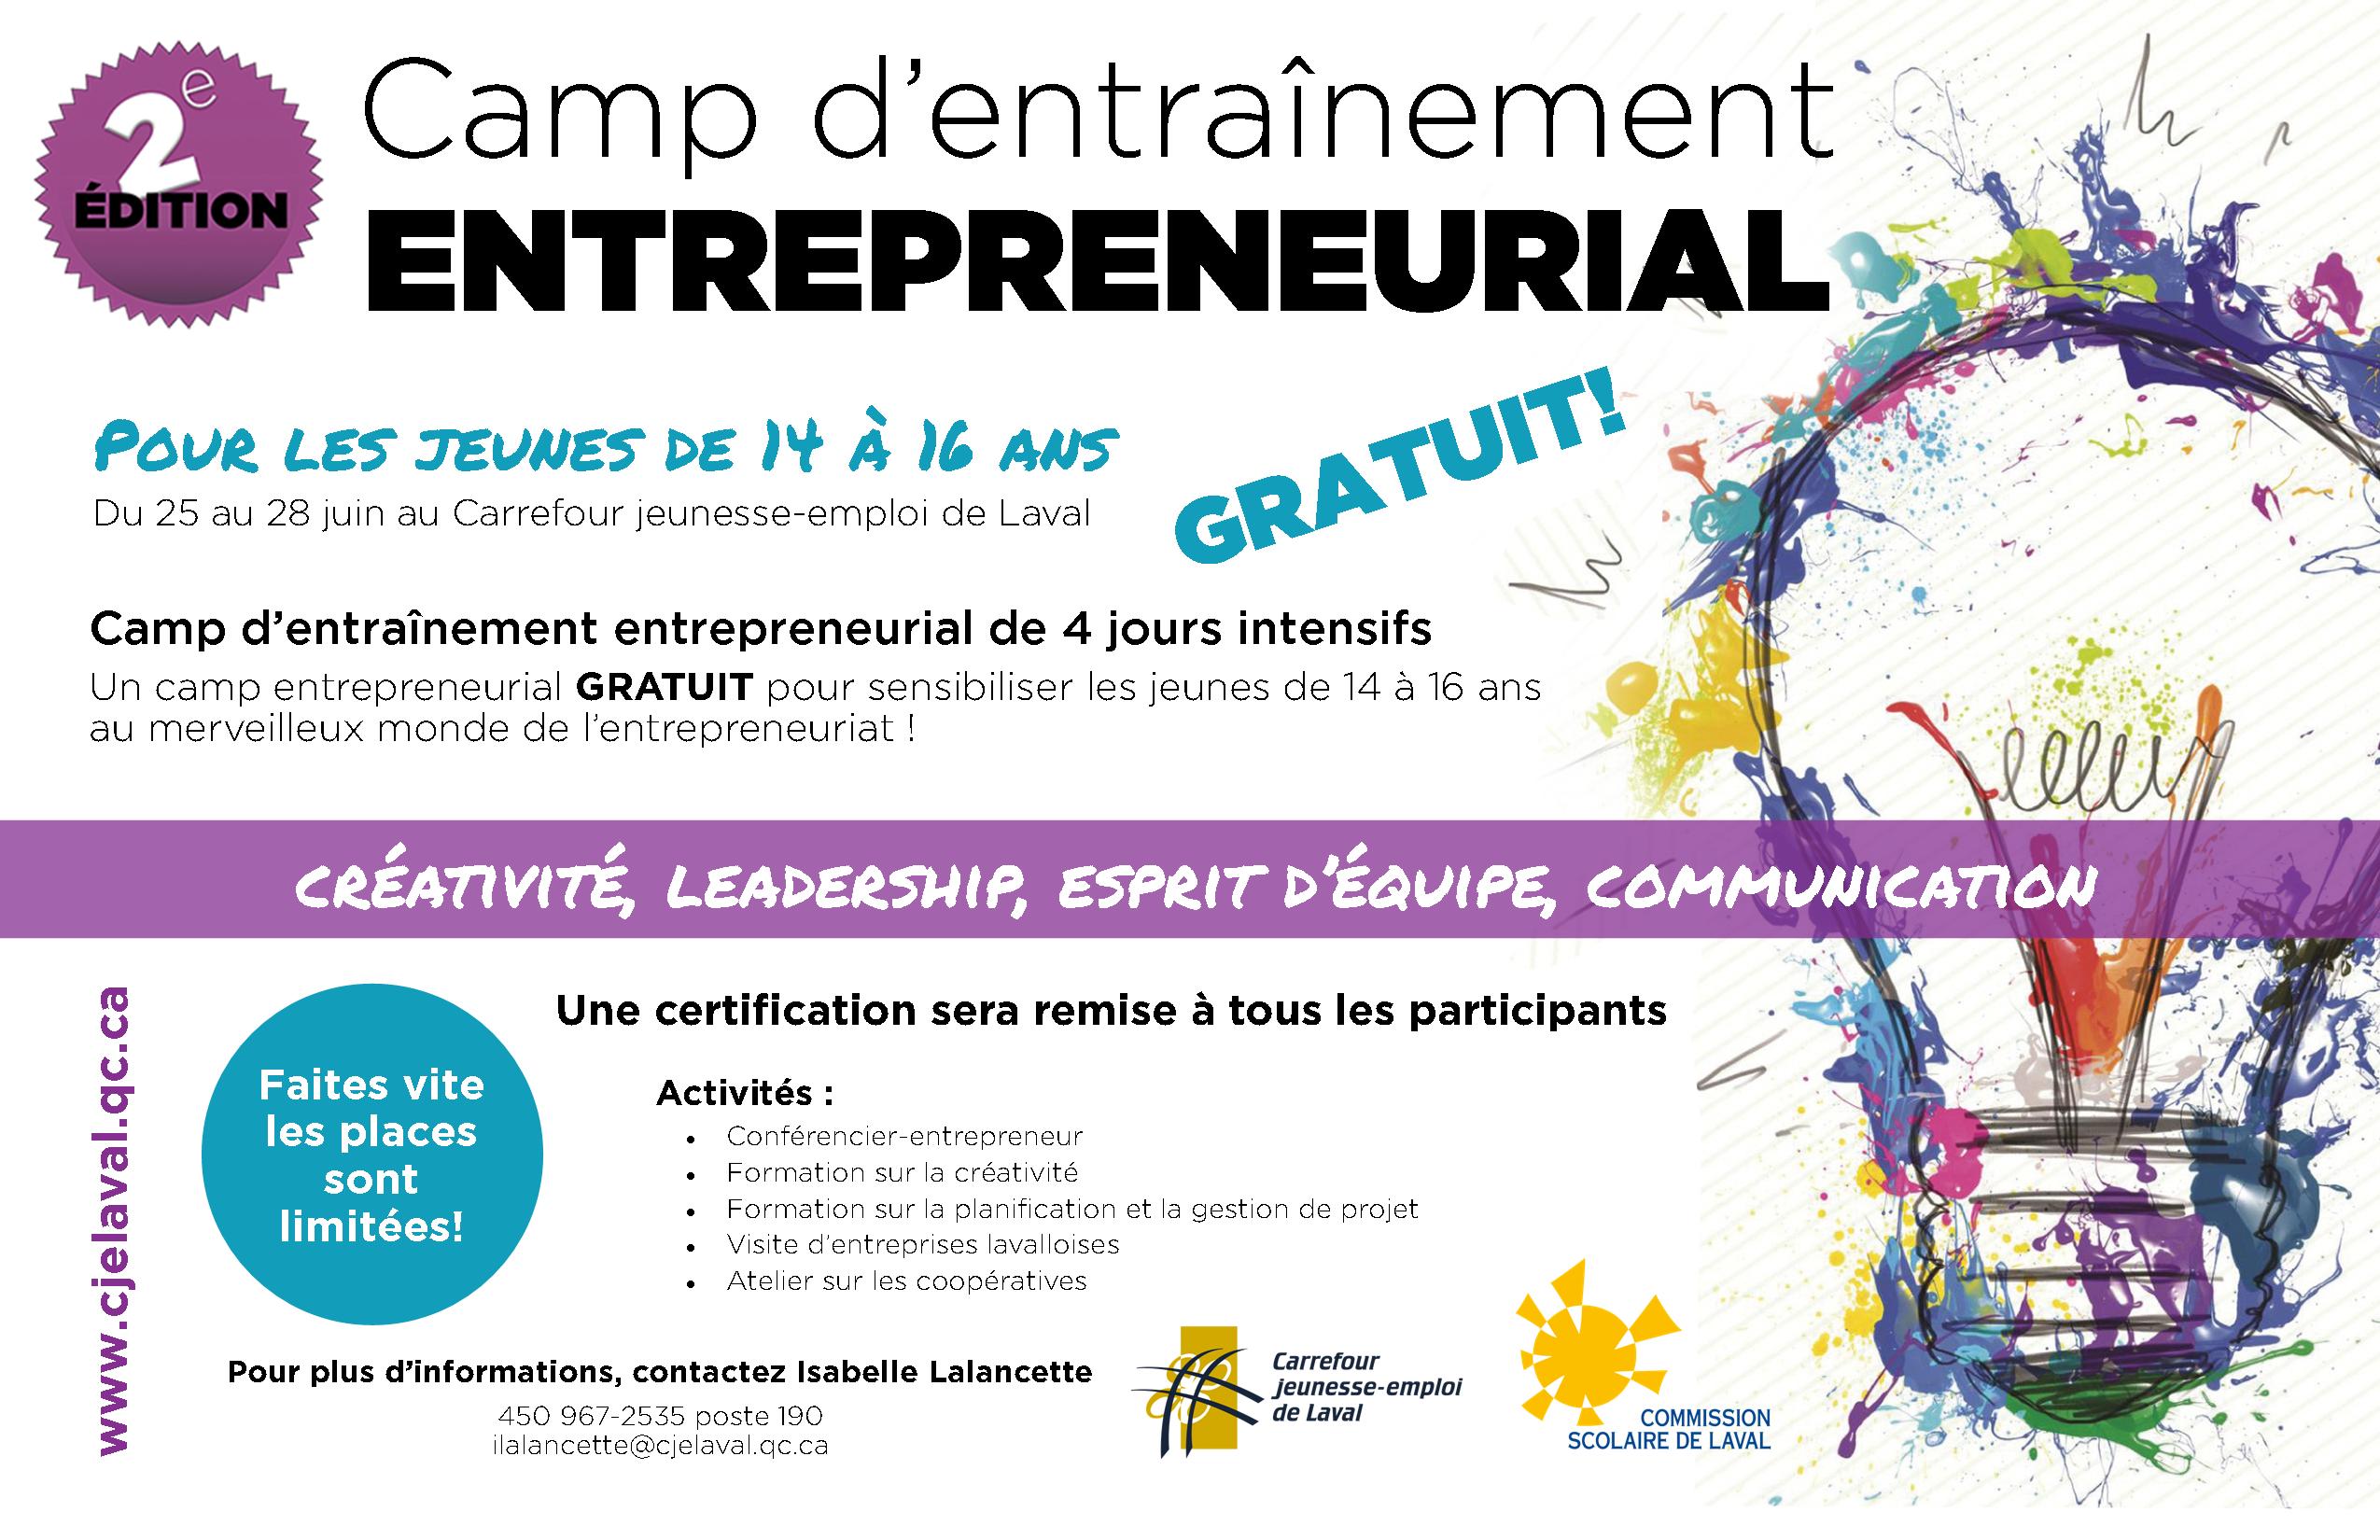 Camp d’entraînement entrepreneurial